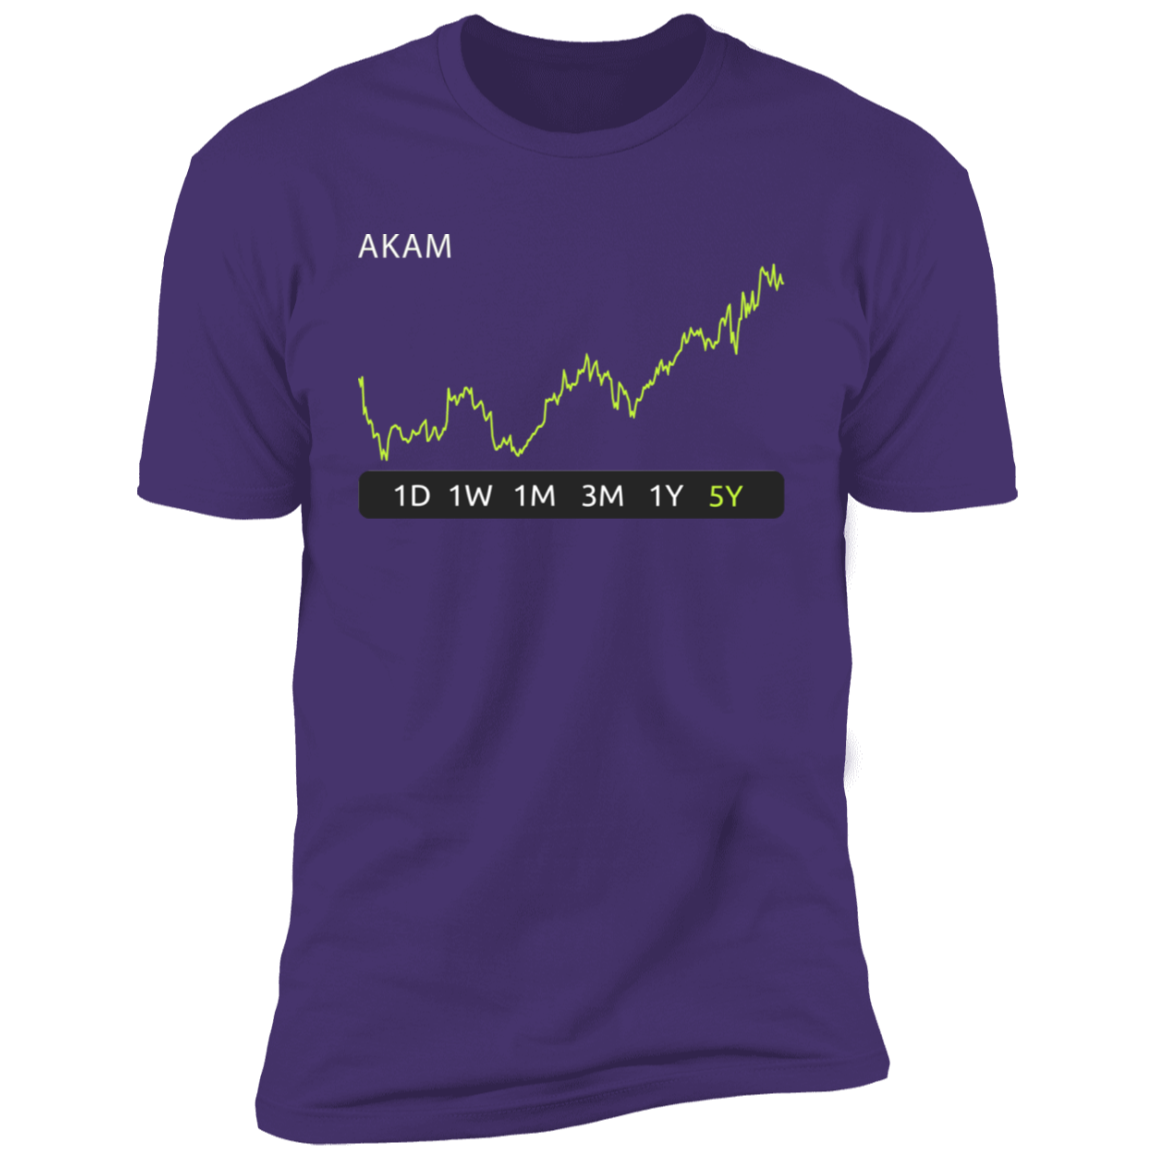 AKAM Stock 5y Premium T-Shirt